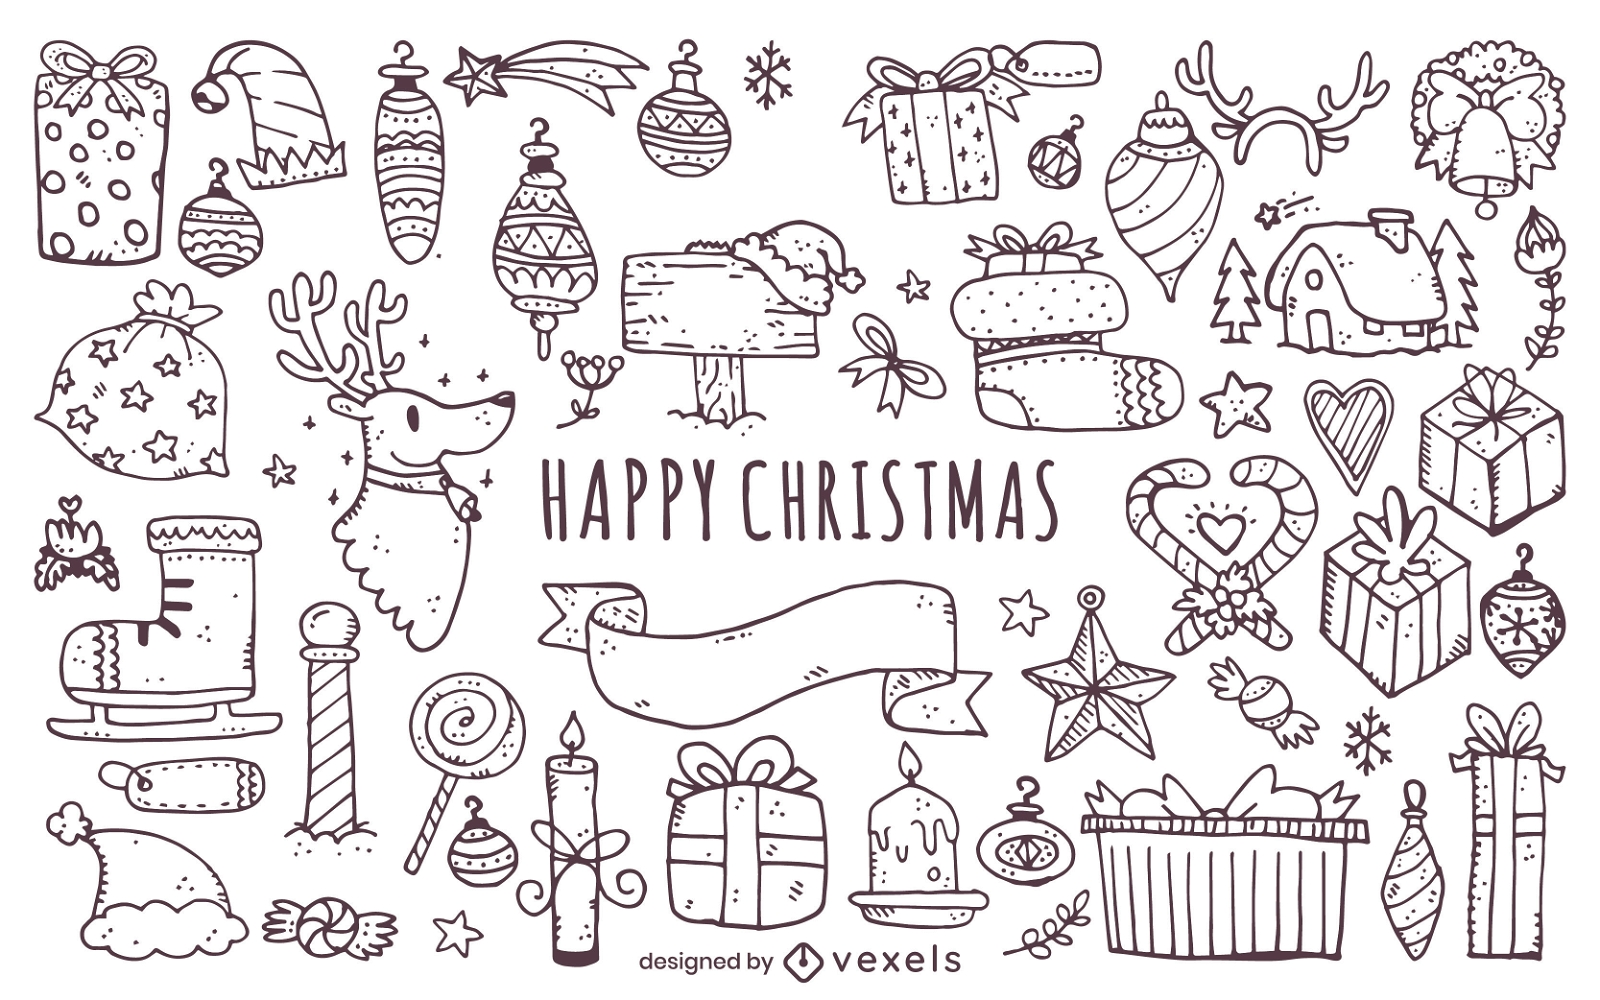 Christmas elements doodles outlines set